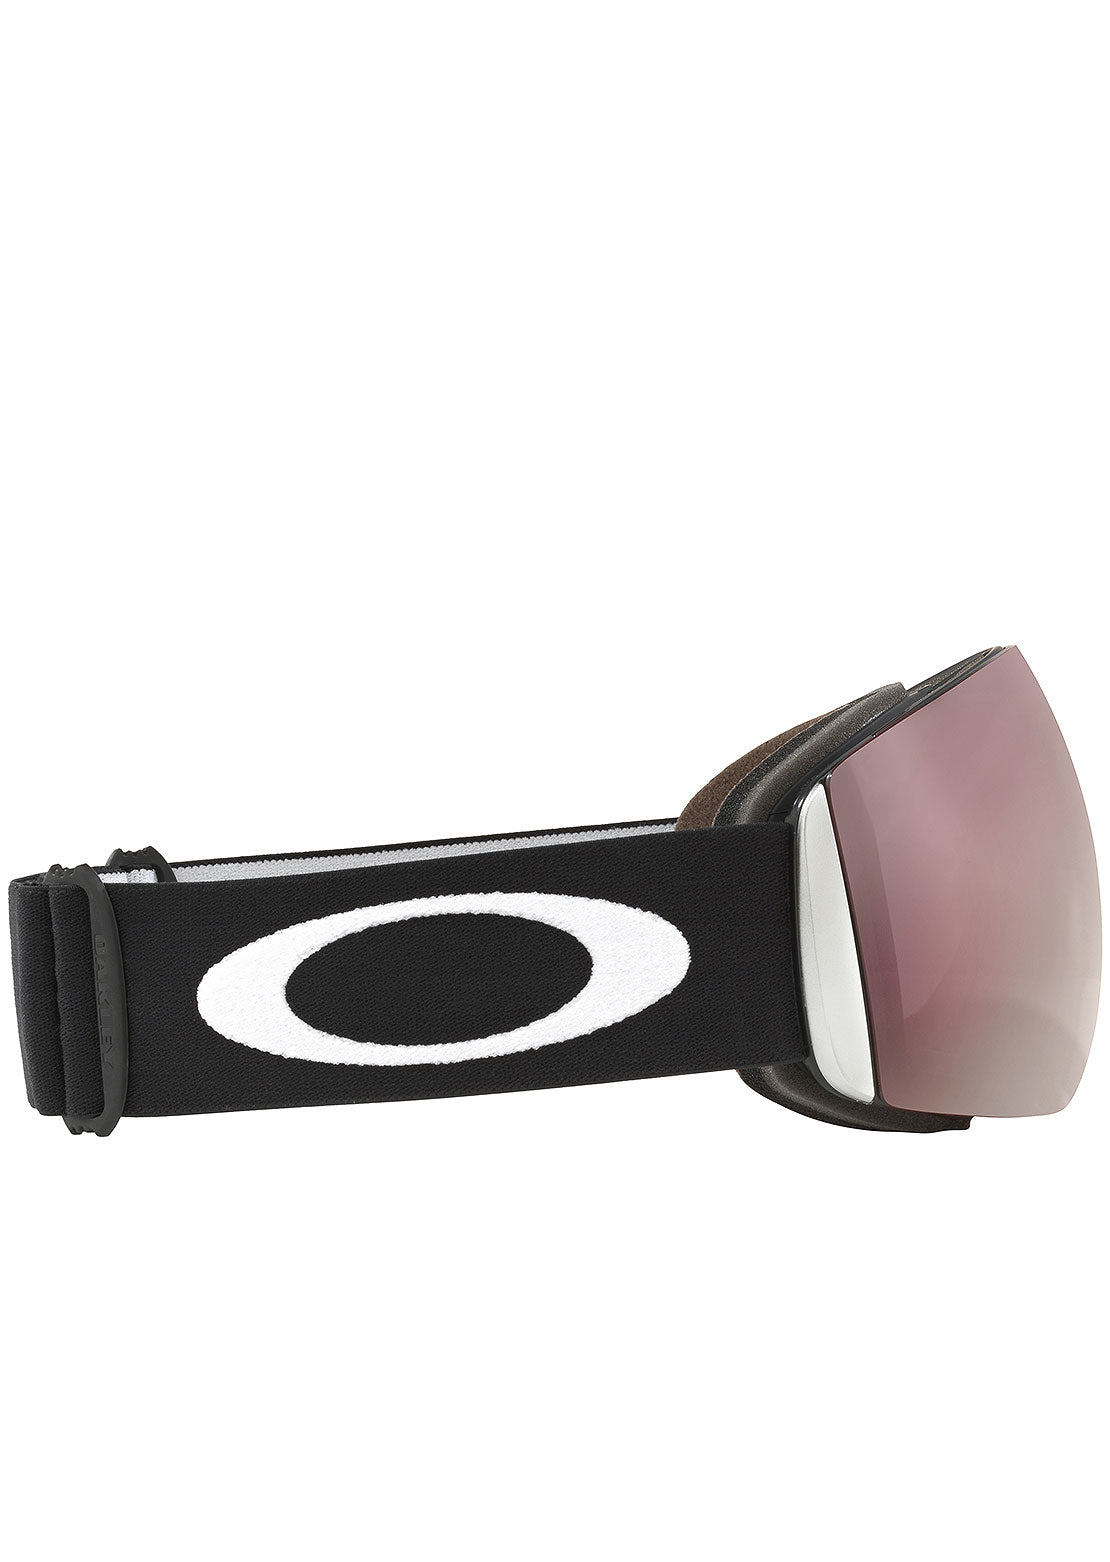 Oakley Flight Deck L Goggles Matte Black/PRIZM Hi Pink Iridium